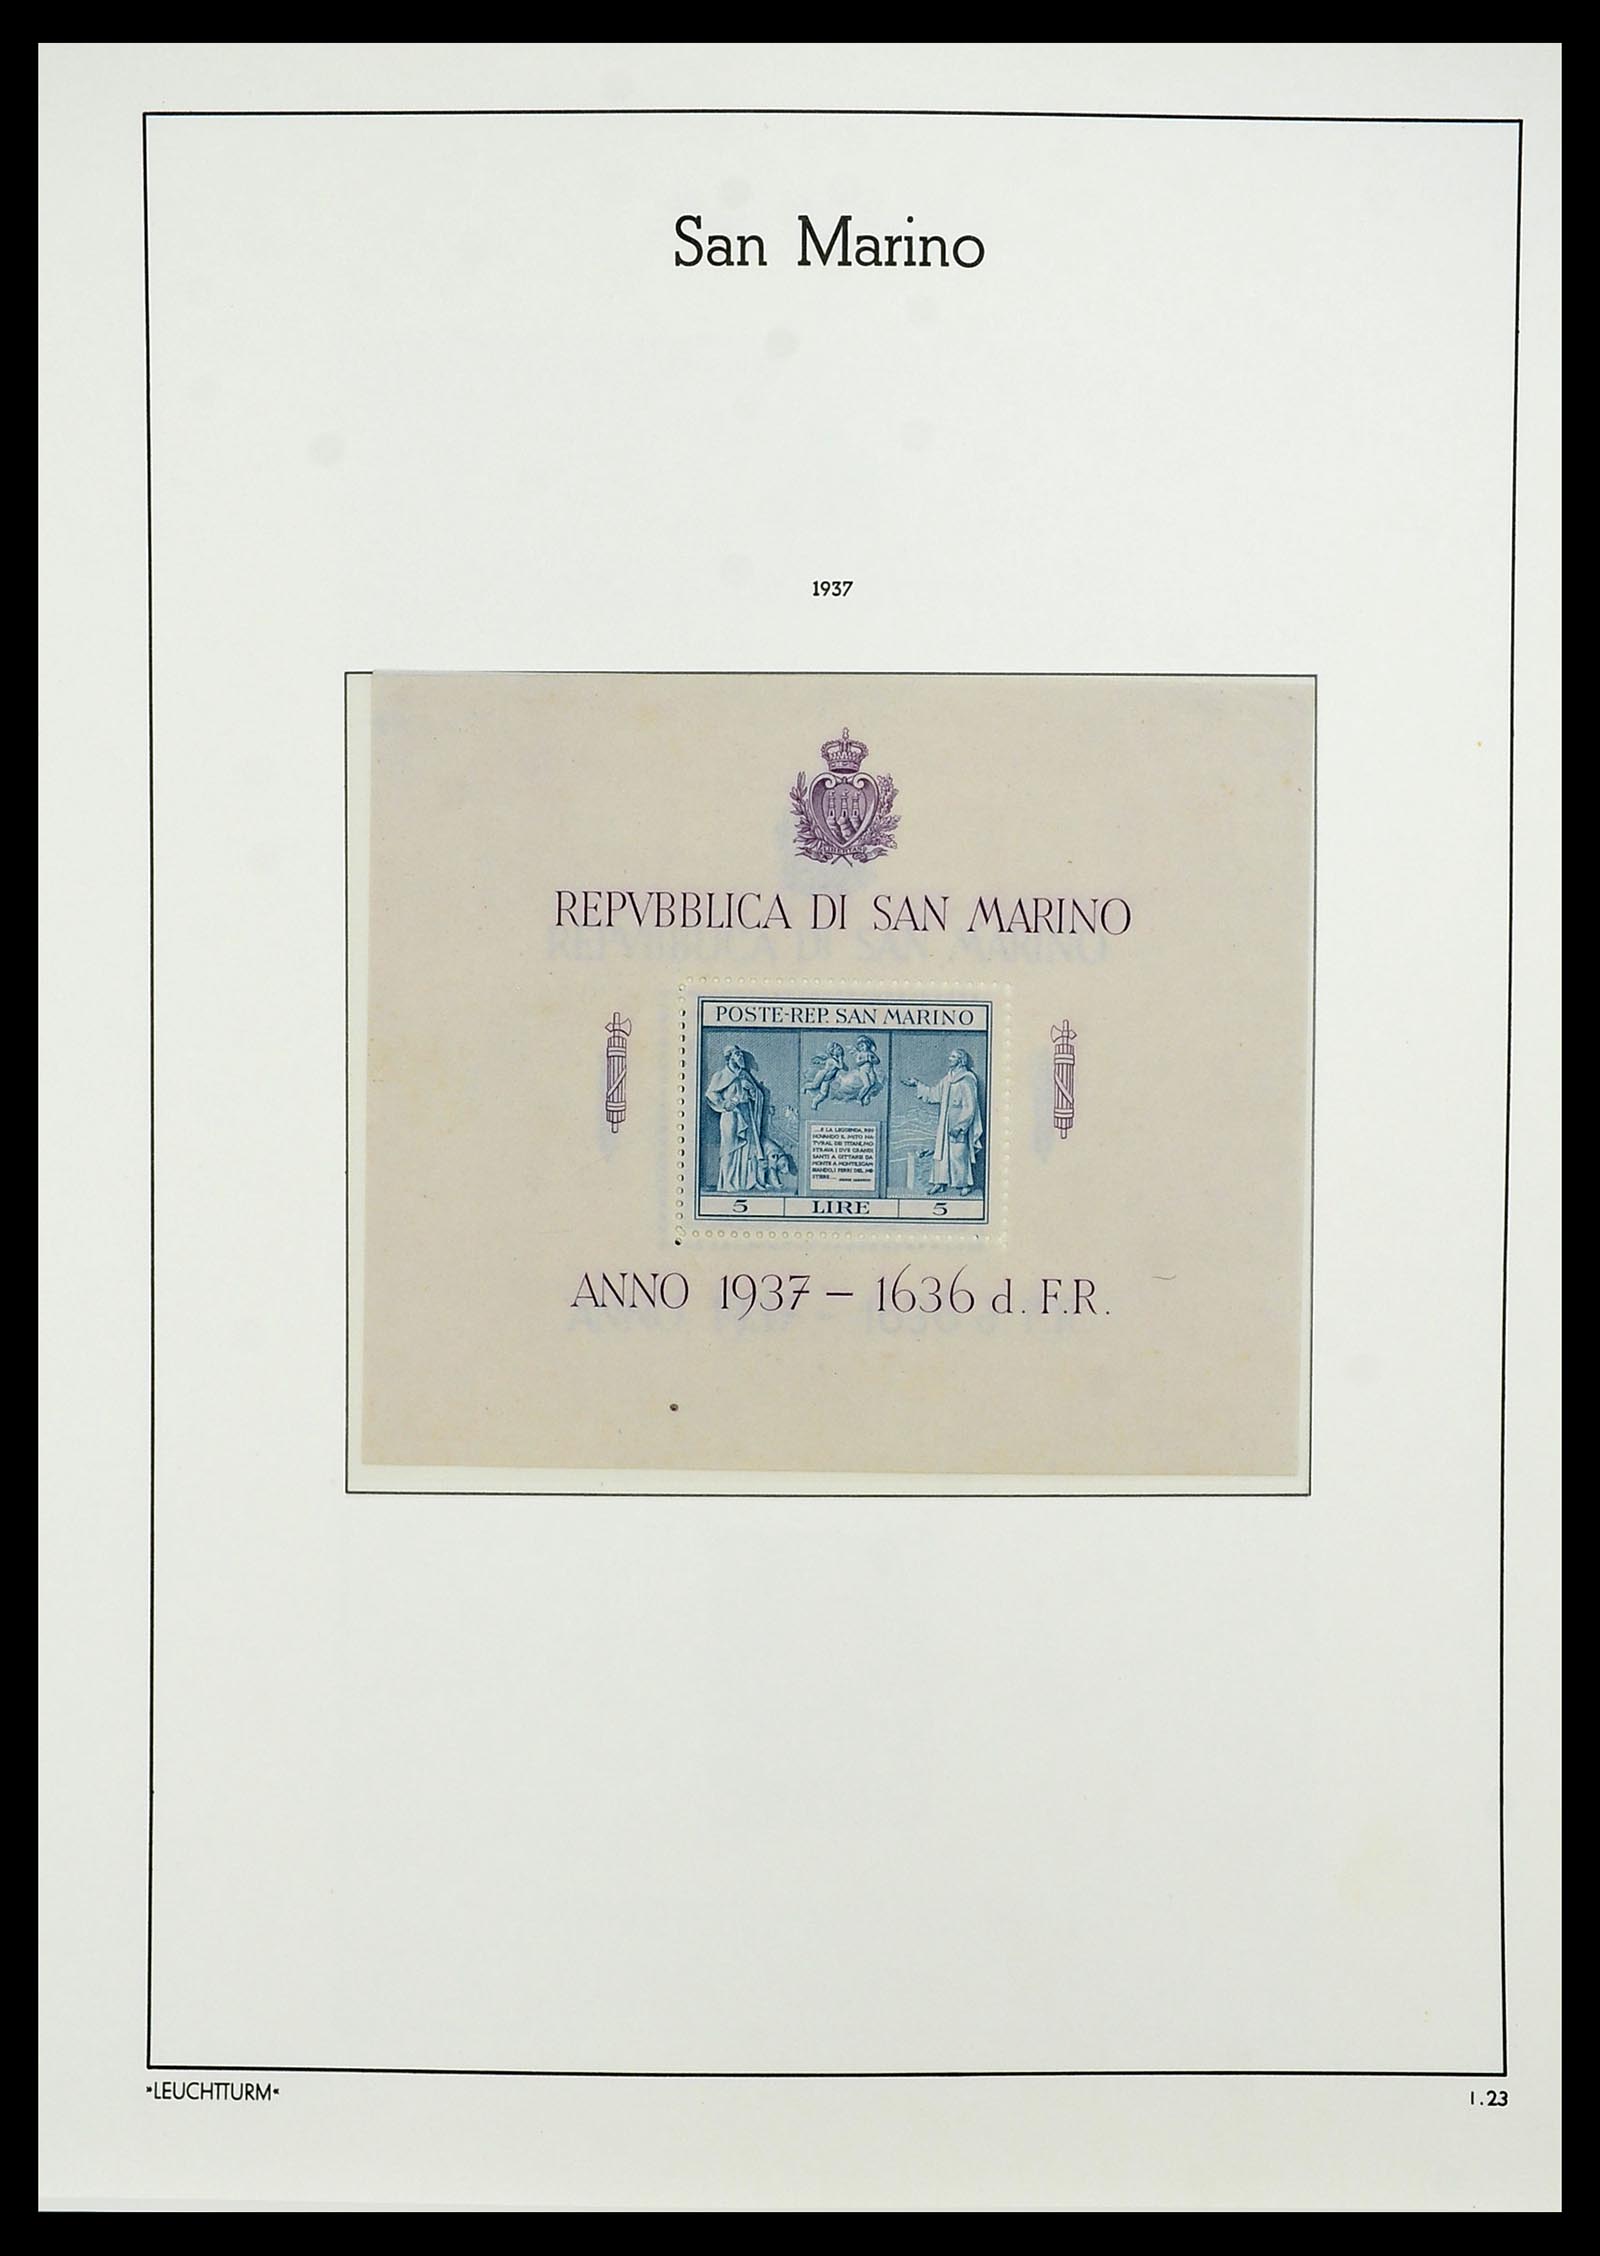 34243 025 - Stamp collection 34243 San Marino 1877-2008.